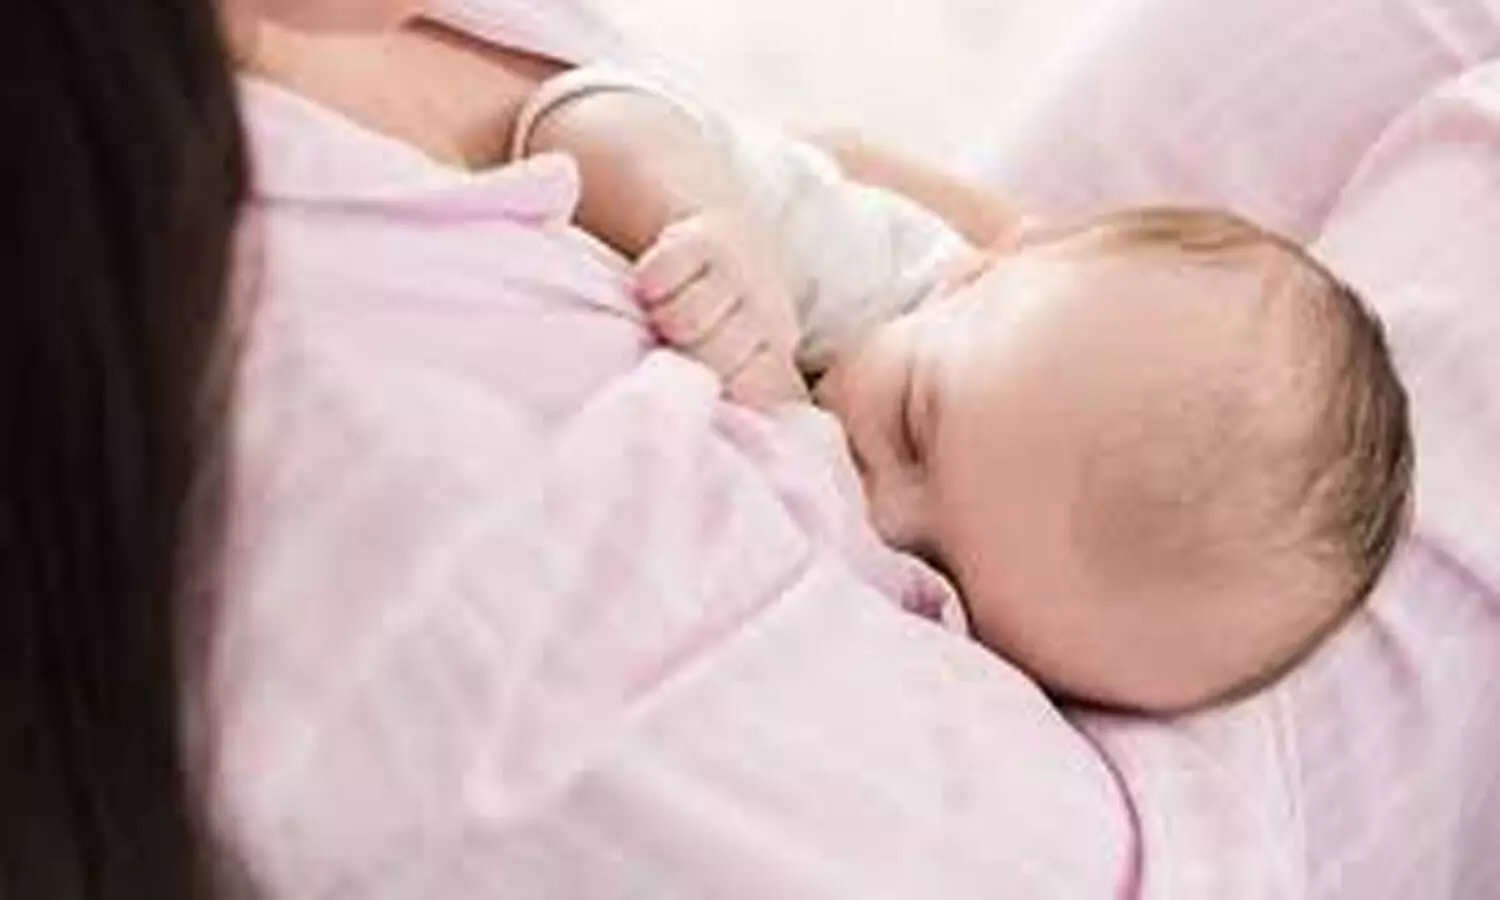 Should breastfeeding continued during Coronavirus treatment?